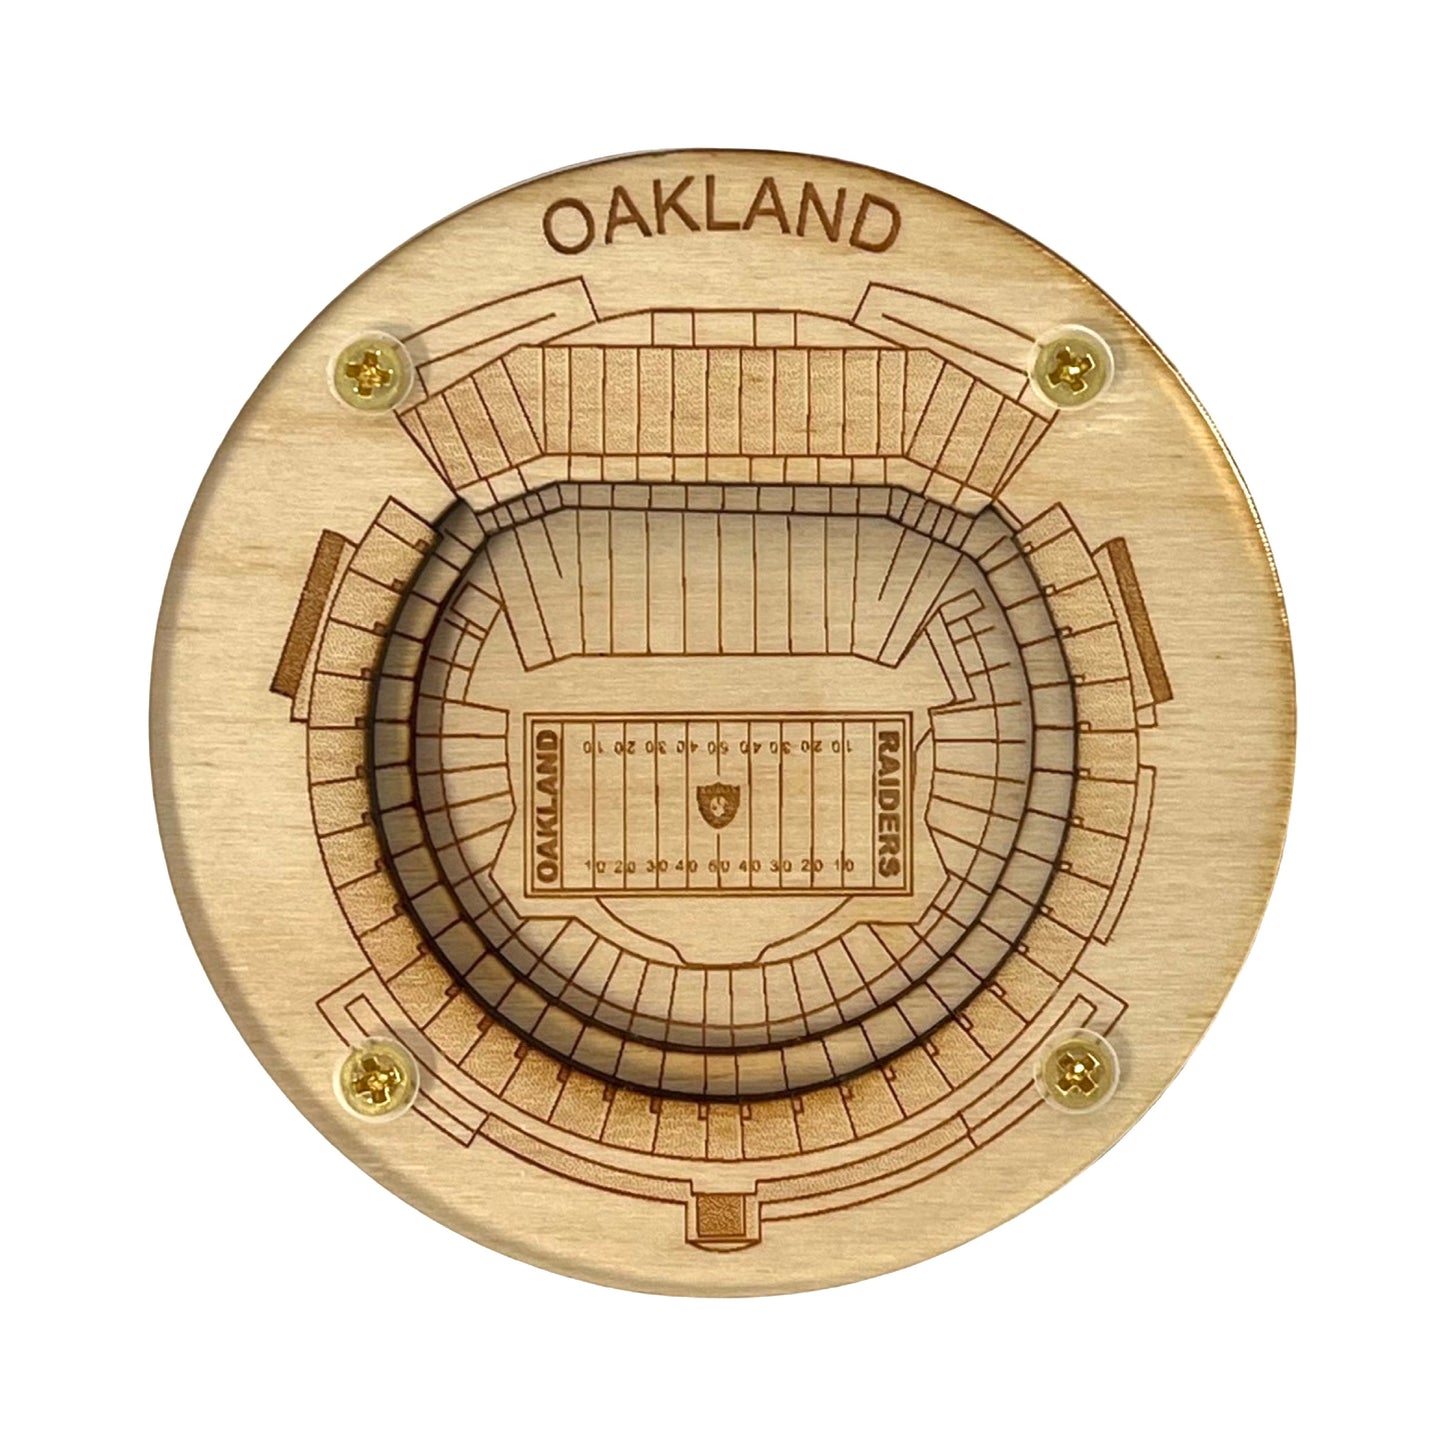 Oakland, California Coaster Art (Oakland-Alameda County Coliseum - Old Raiders)